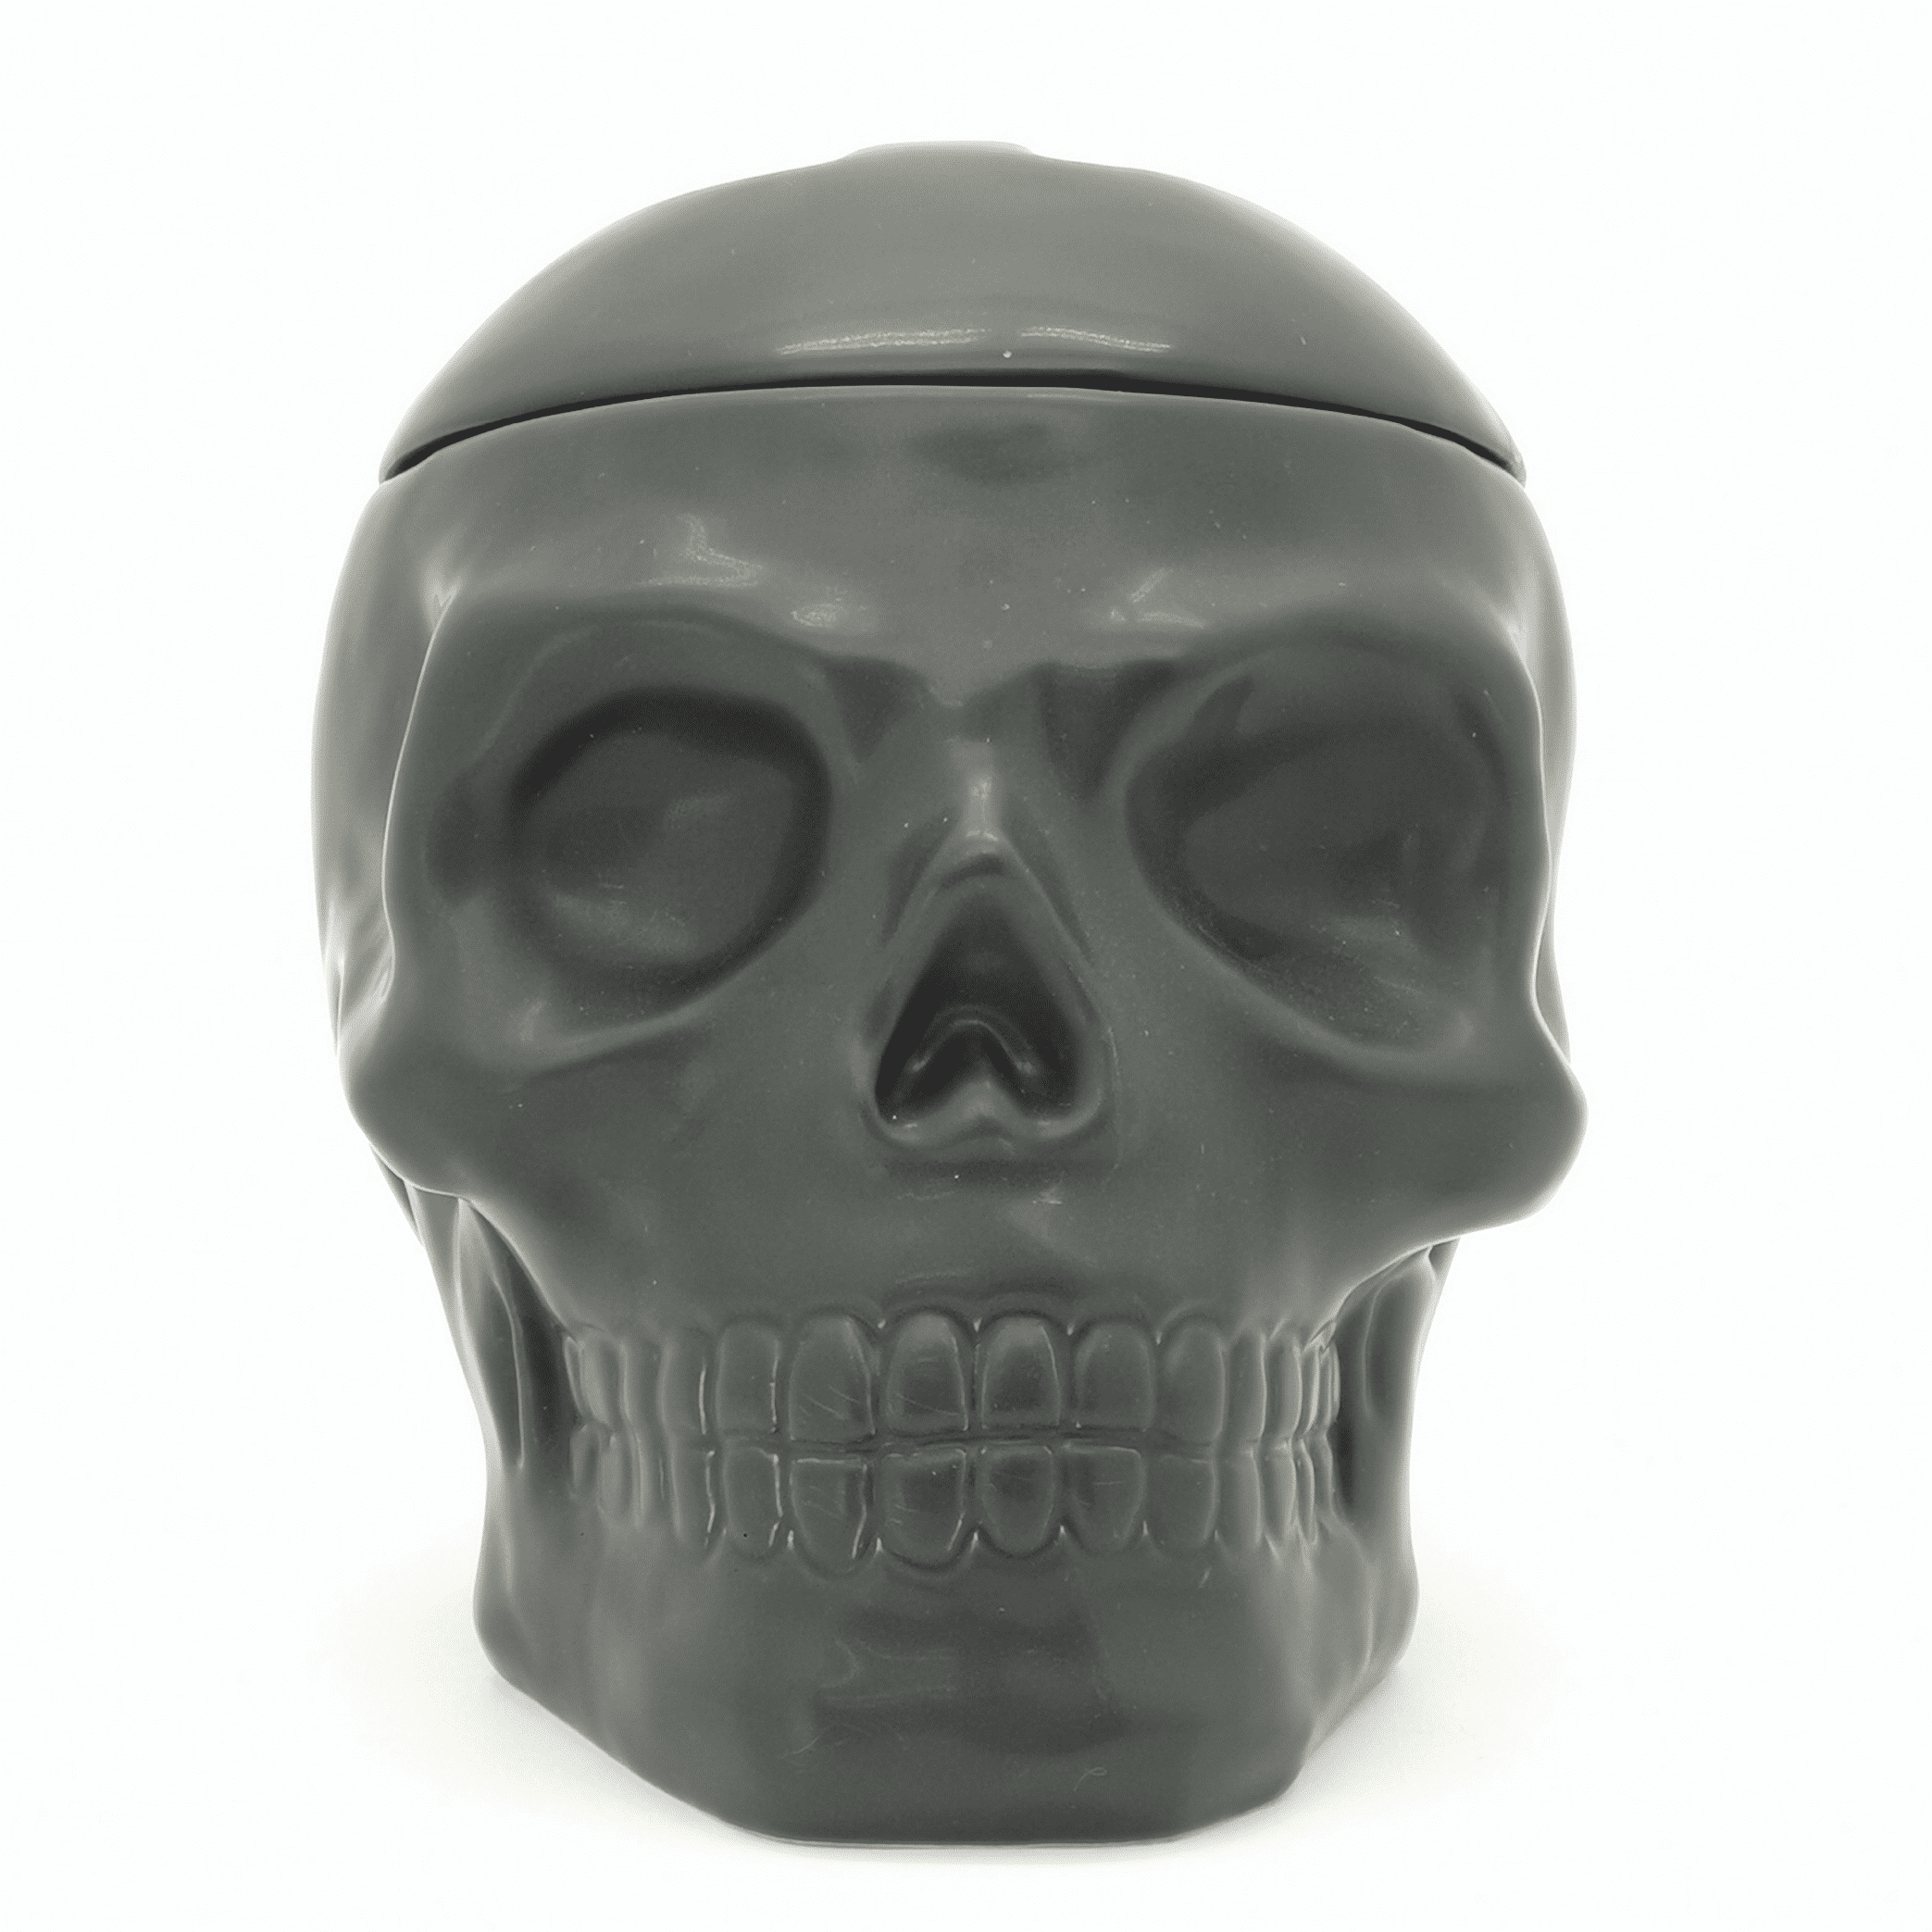 Way to Celebrate! Skull Treat Jar, Black Earthenware, 6.3" H, 24 fl oz capaity